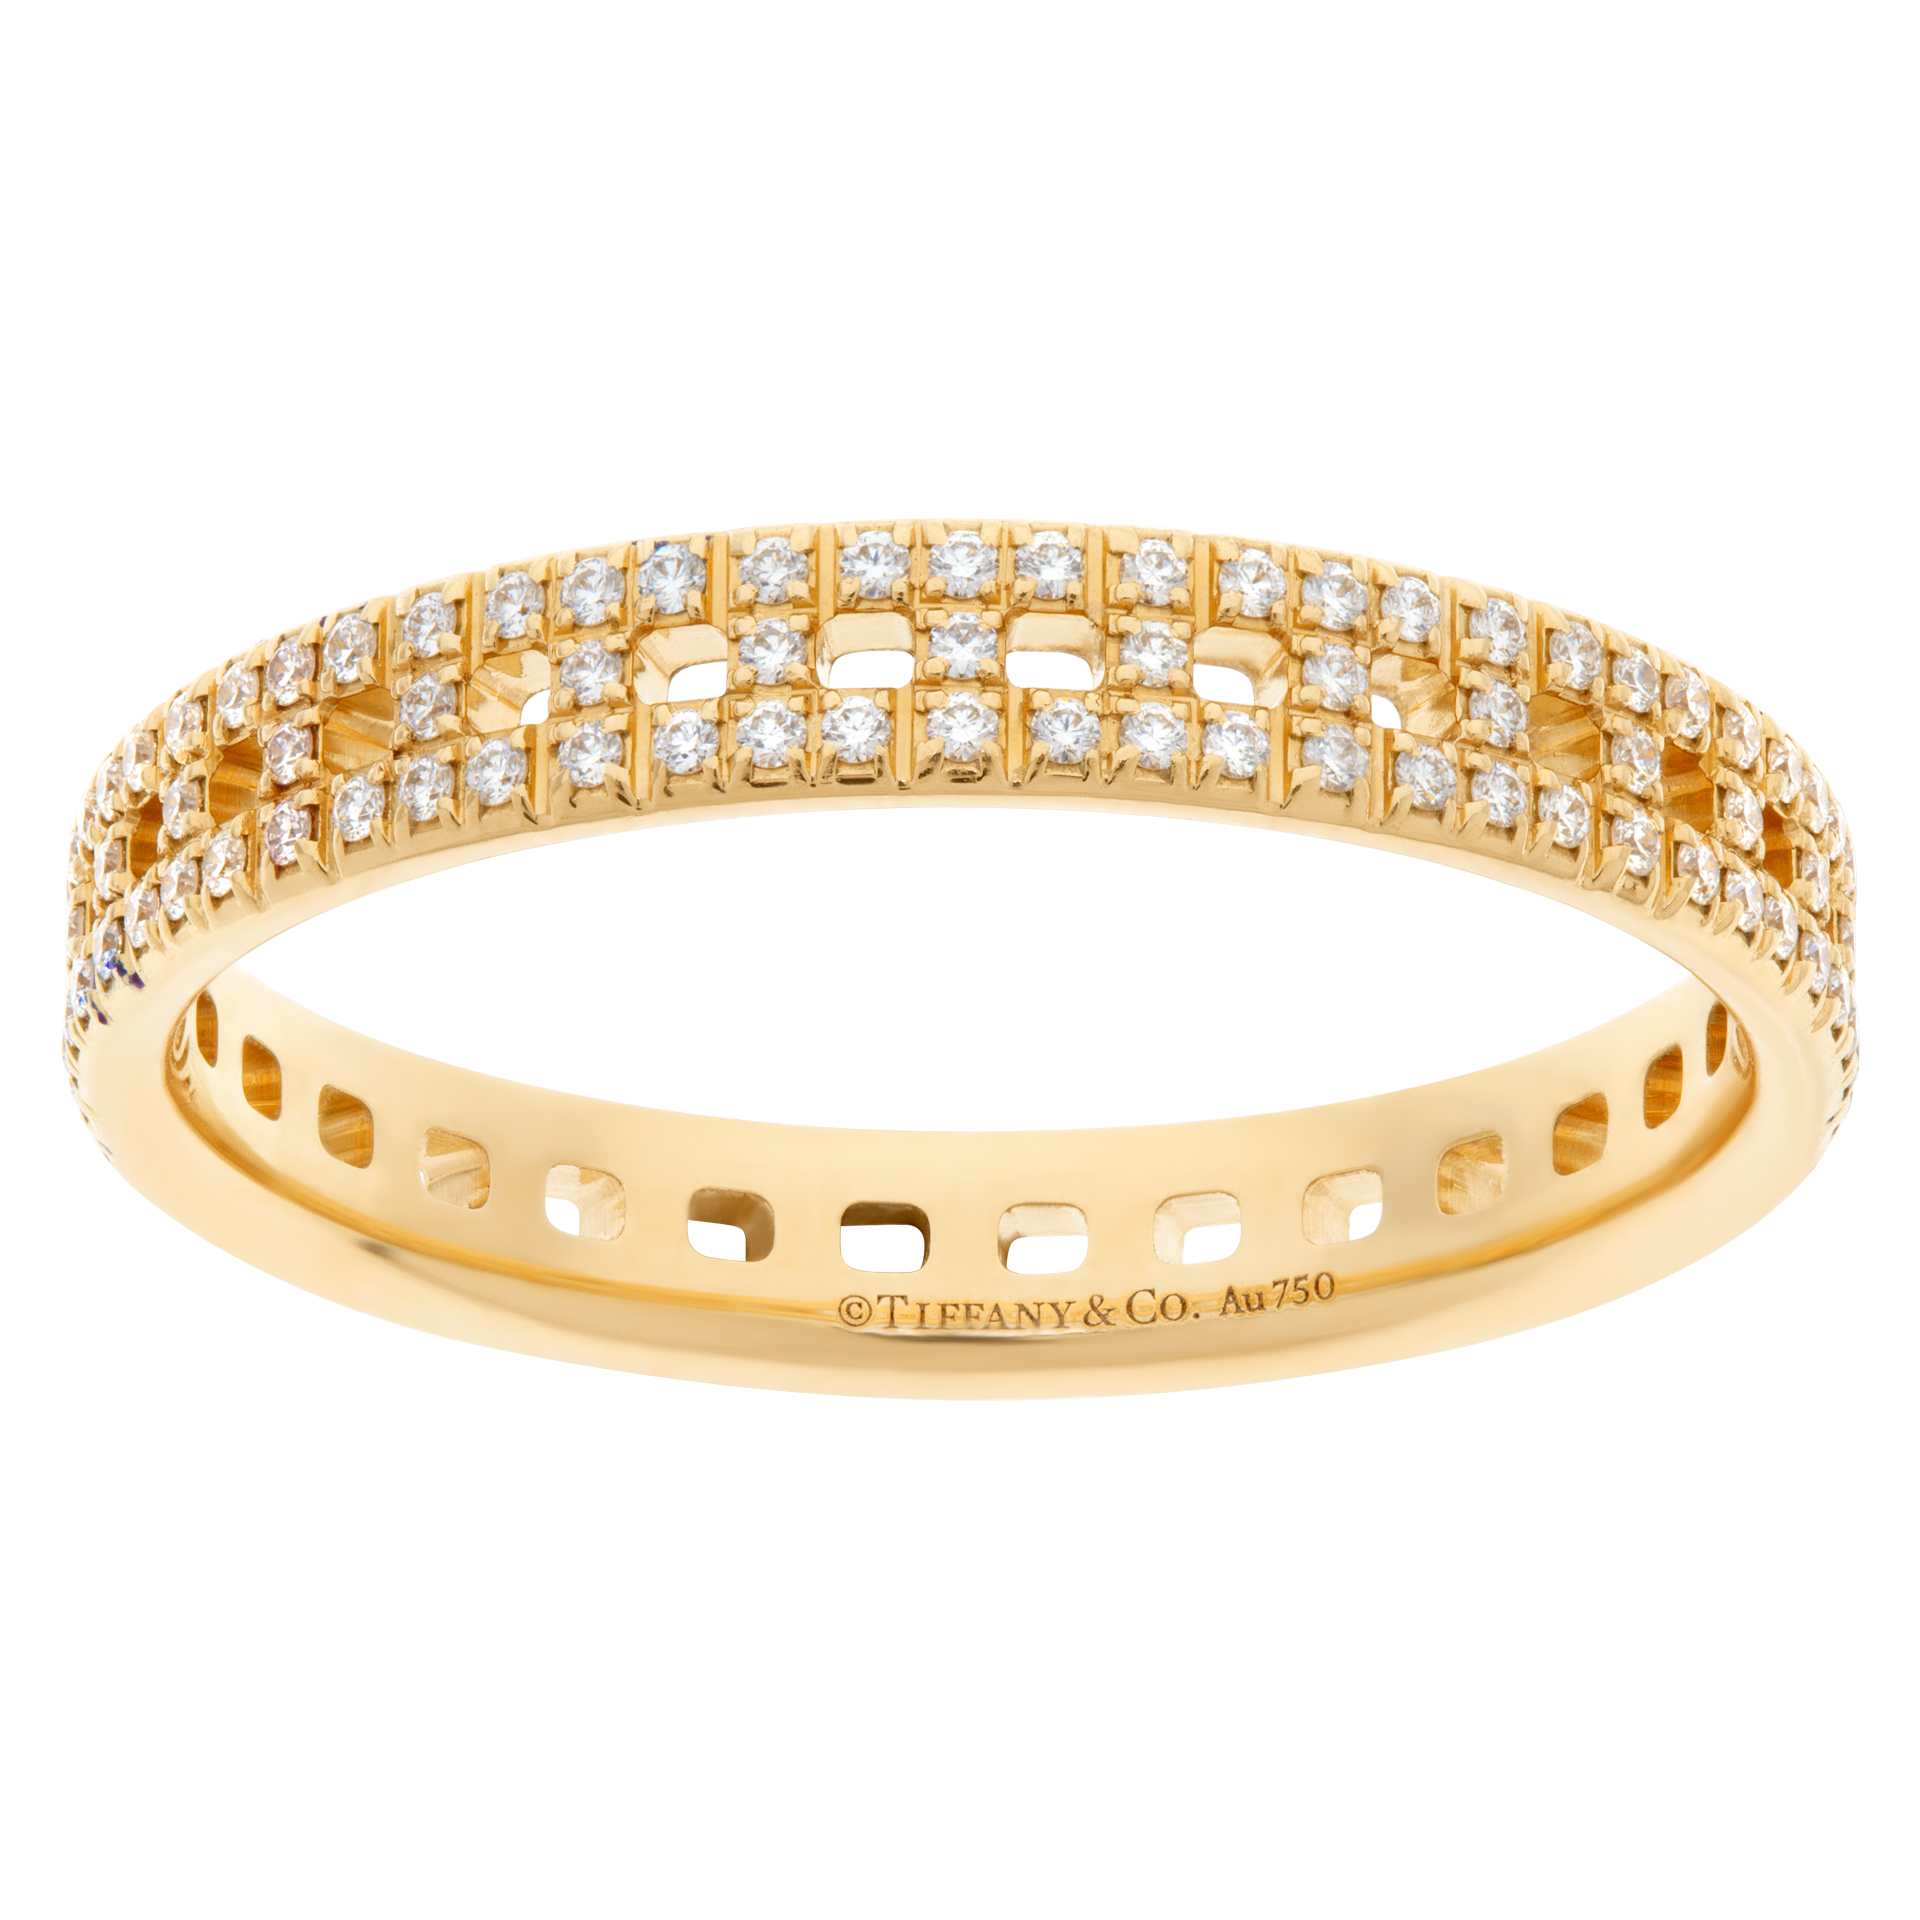 Tiffany & Co. True T Narrow ring 18k rose gold with diamonds image 1